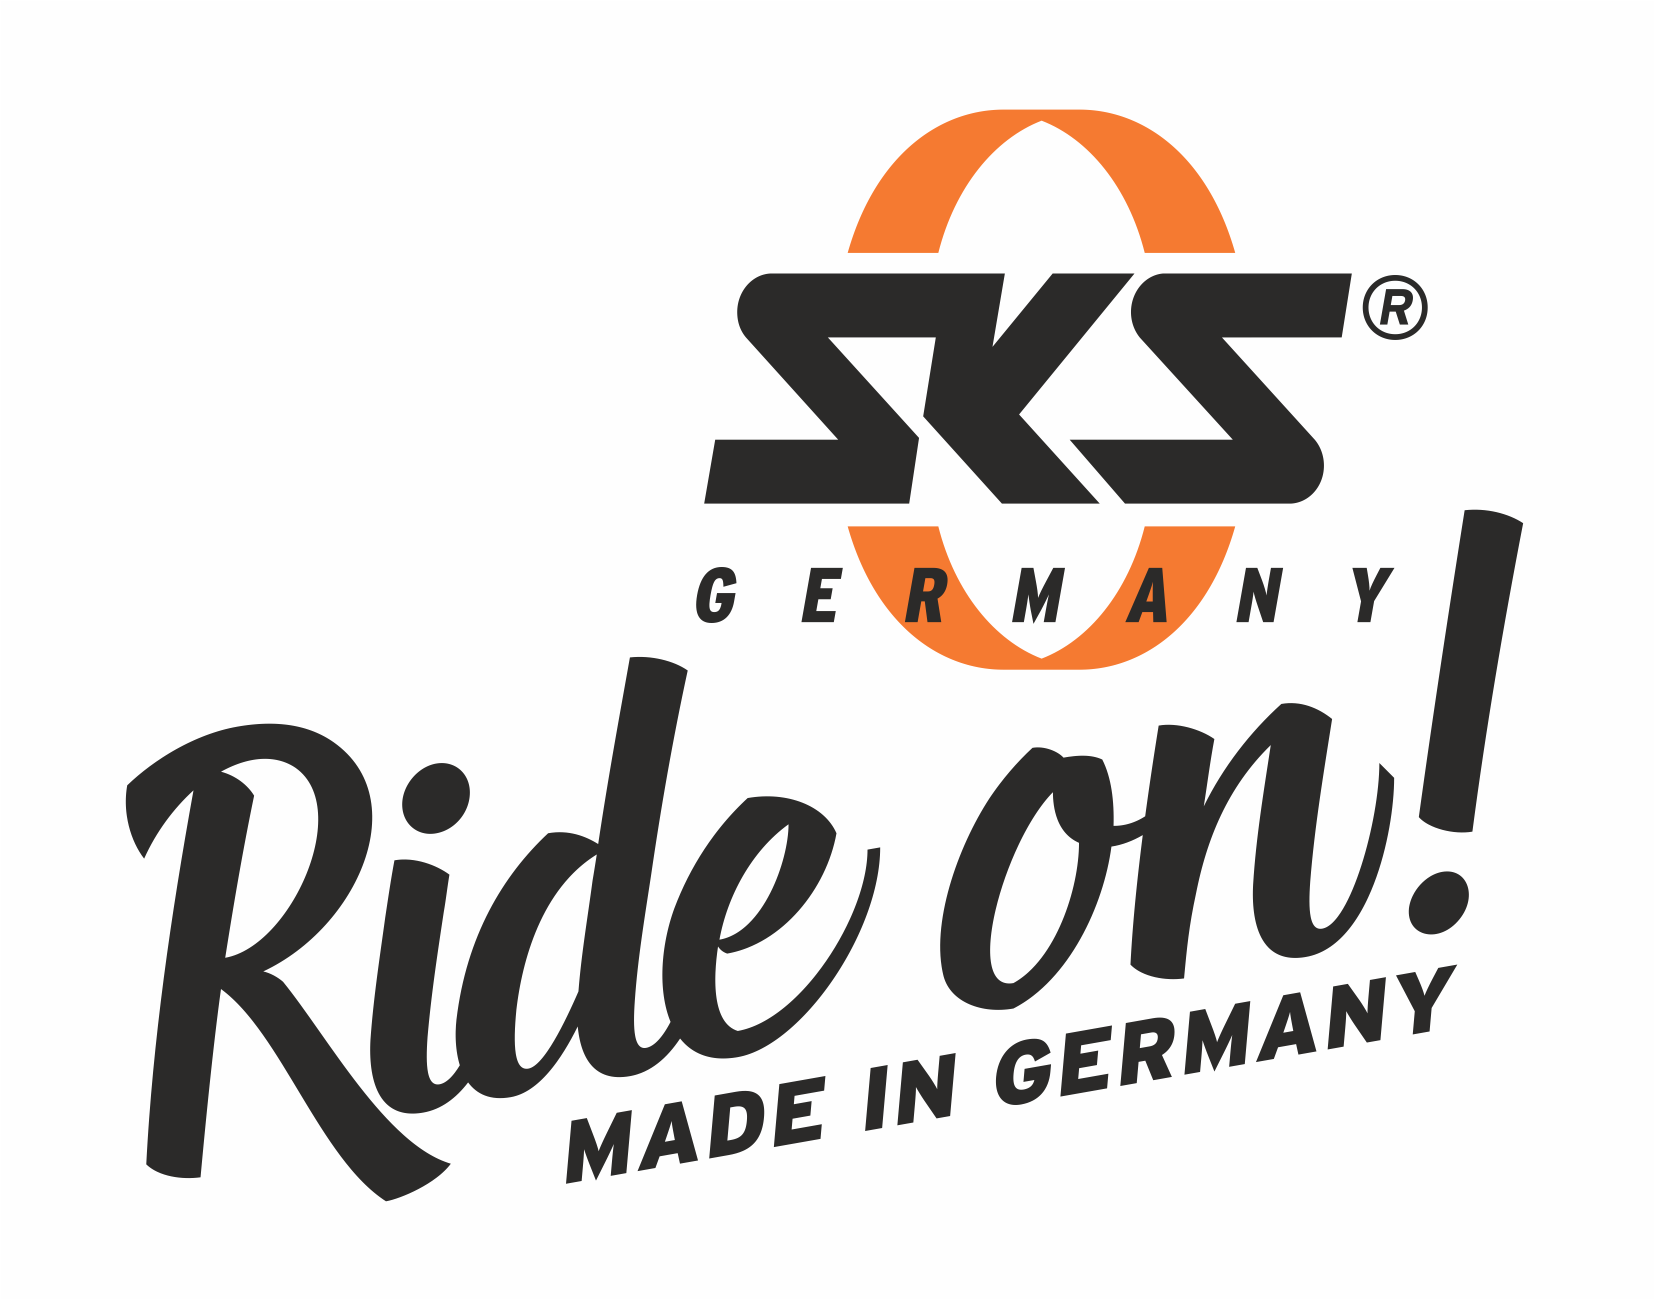 Logo SKS